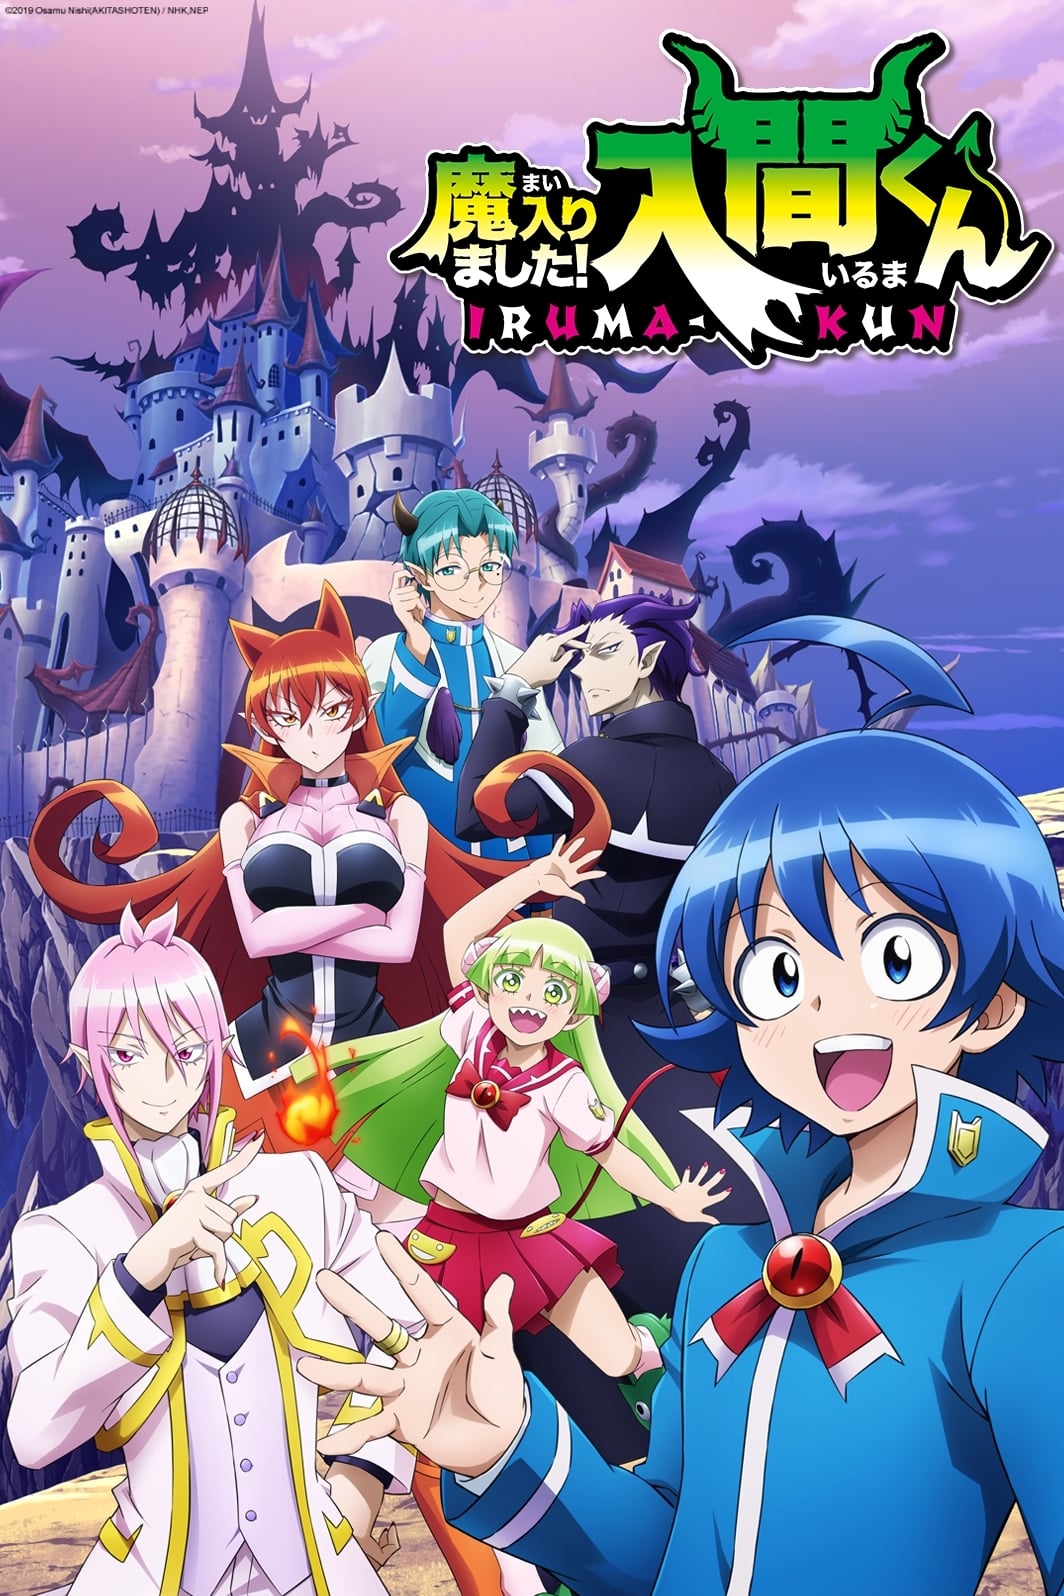 STARFLIX  Filmes & Séries no Drive on X: Anime: 'Demon Slayer